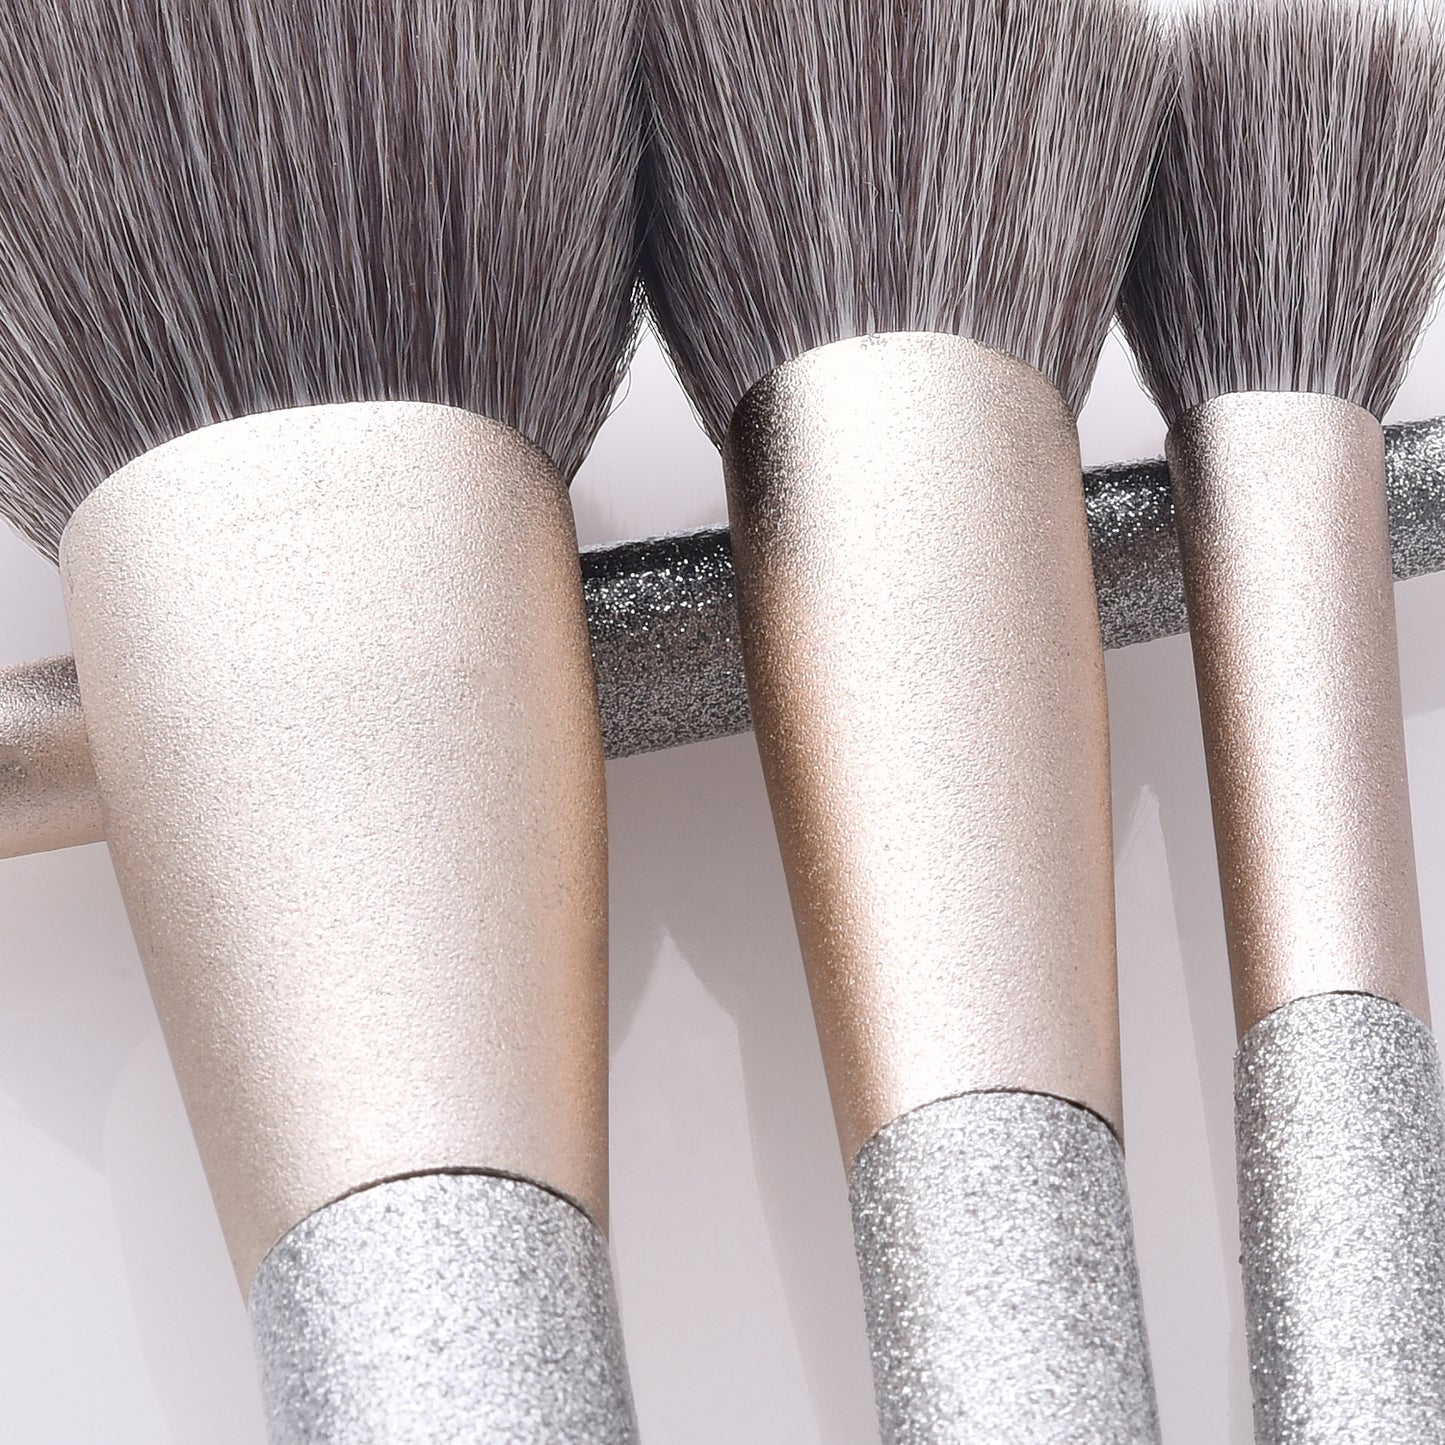 10 Piece Silver Shimmer Pro Sleek Brush Set - MQO 25 pcs